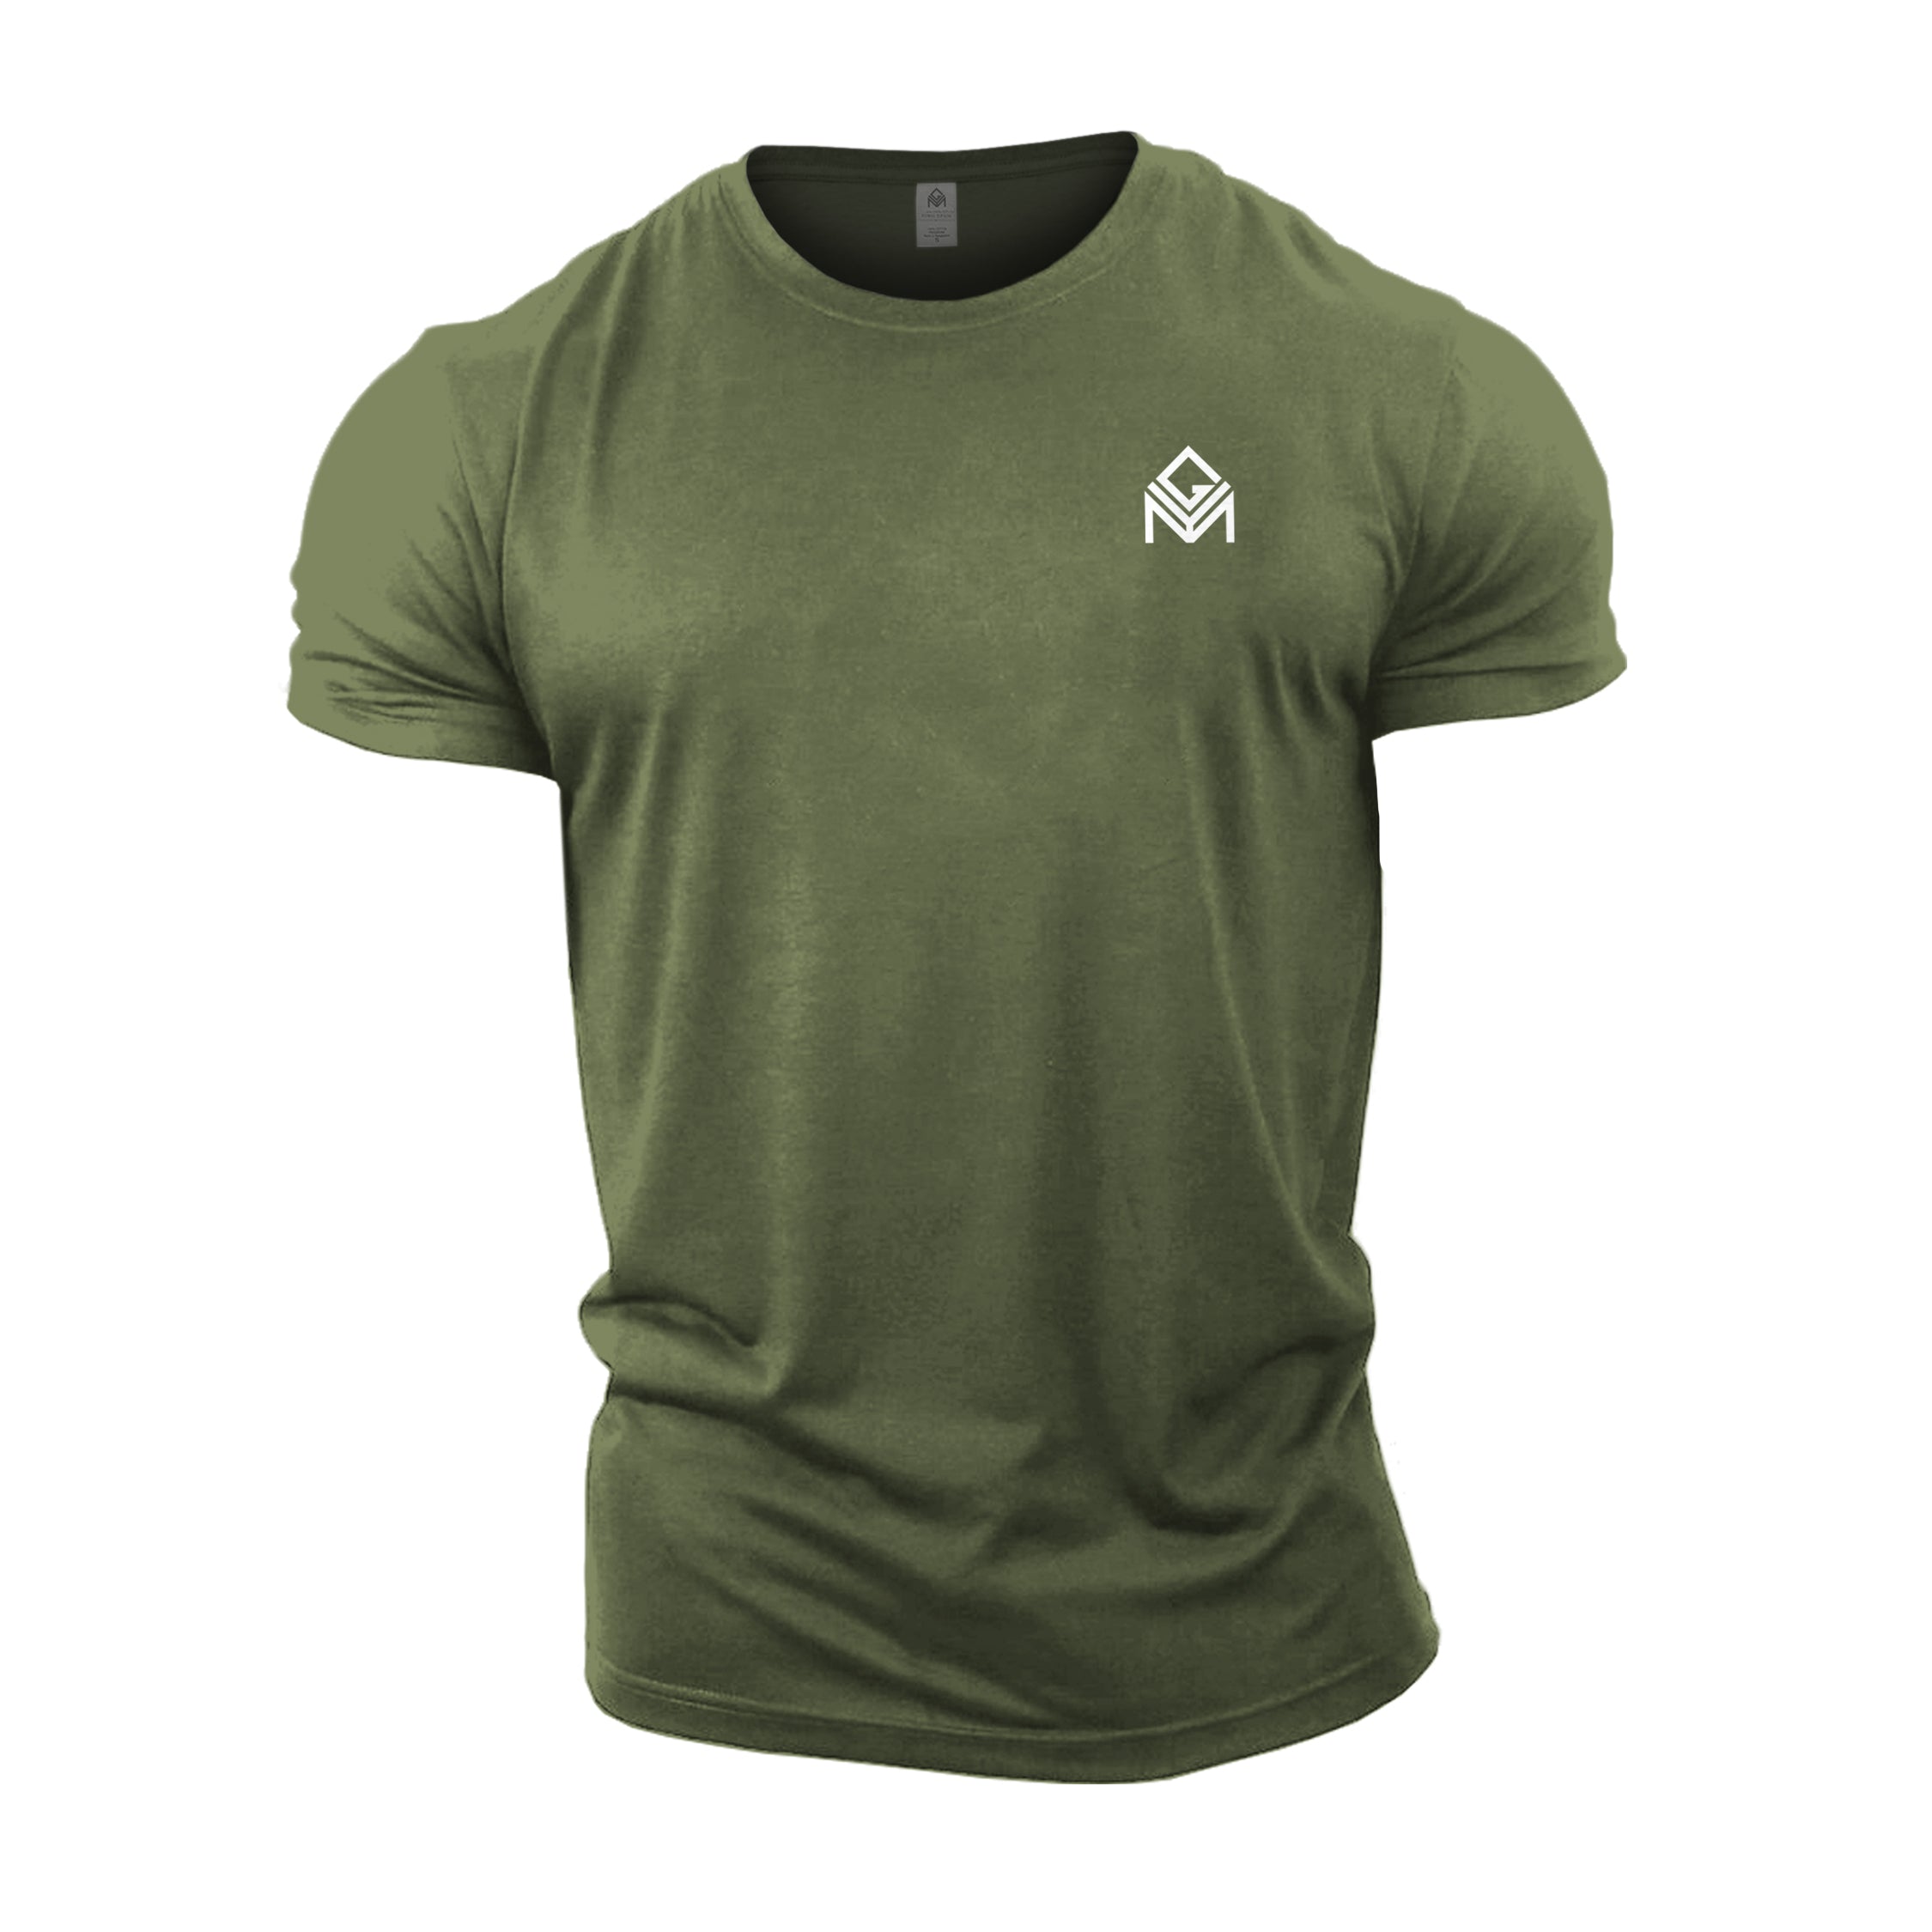 Spartan Helmet - Gym T-Shirt